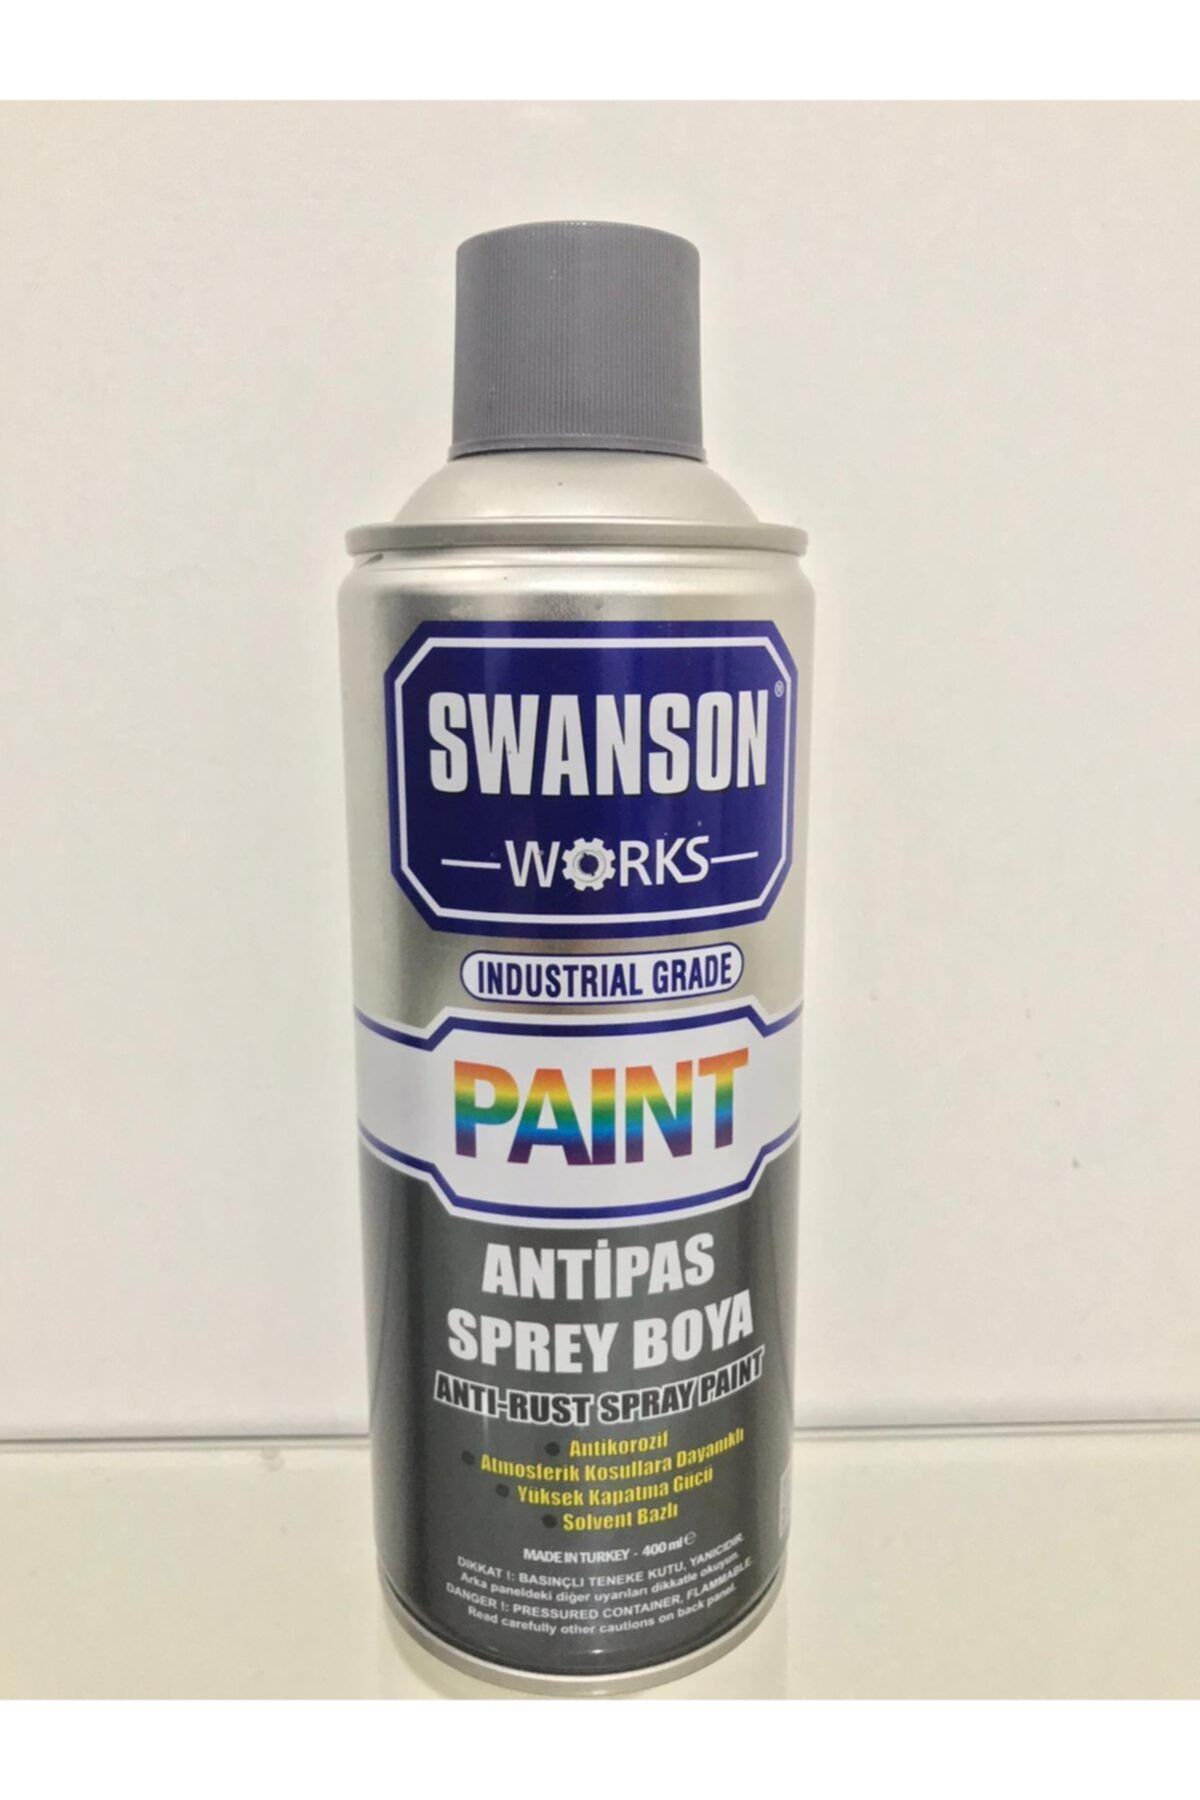 SWANSON WORKS Antipas Sprey Boya 400 ml